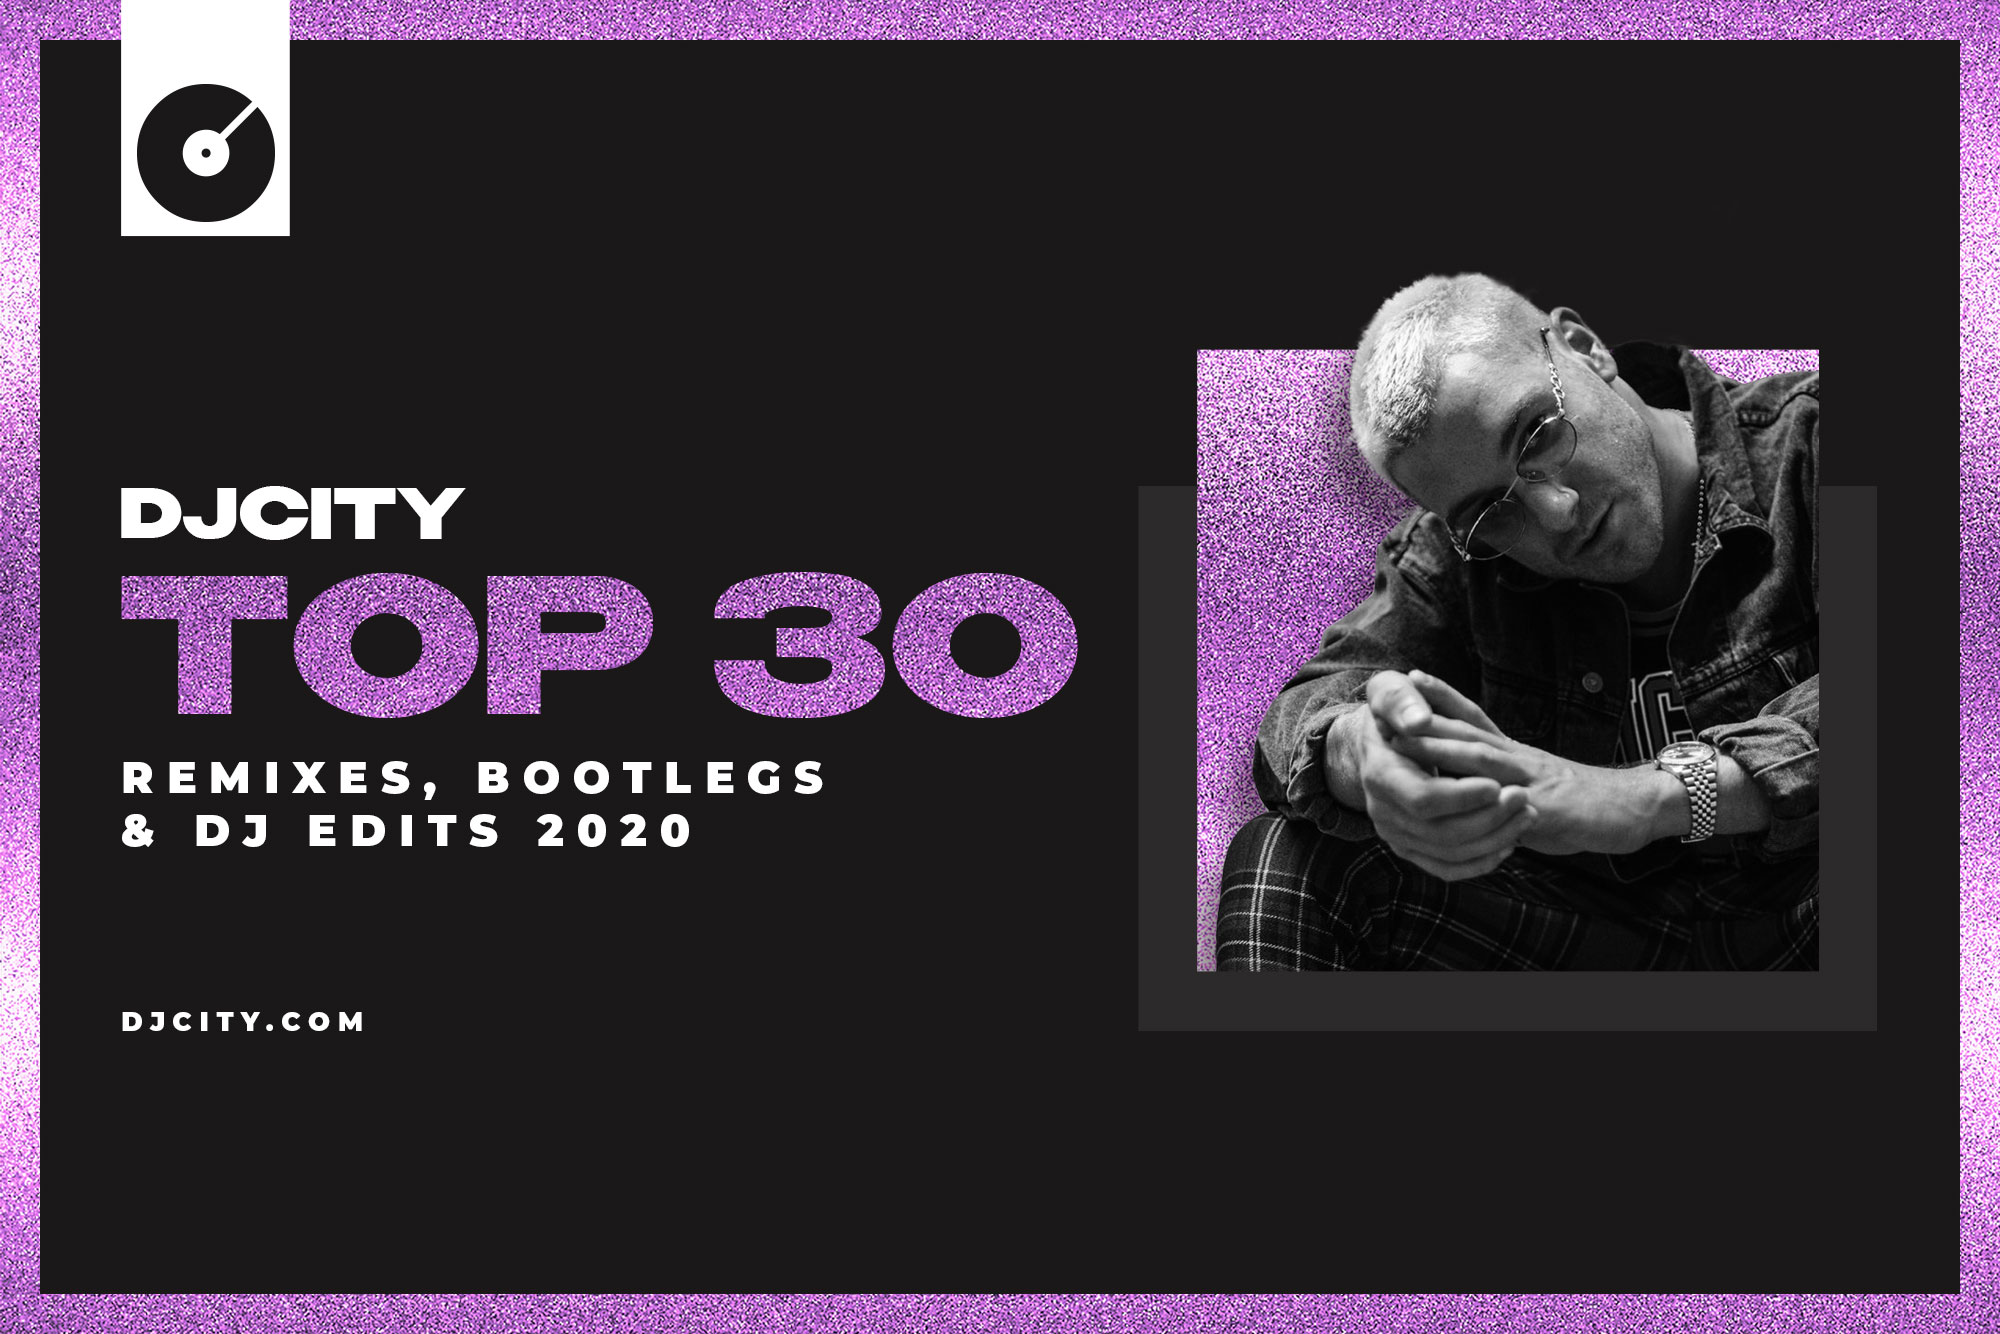 Top 30 Remixes, Bootlegs and DJ Edits of 2020